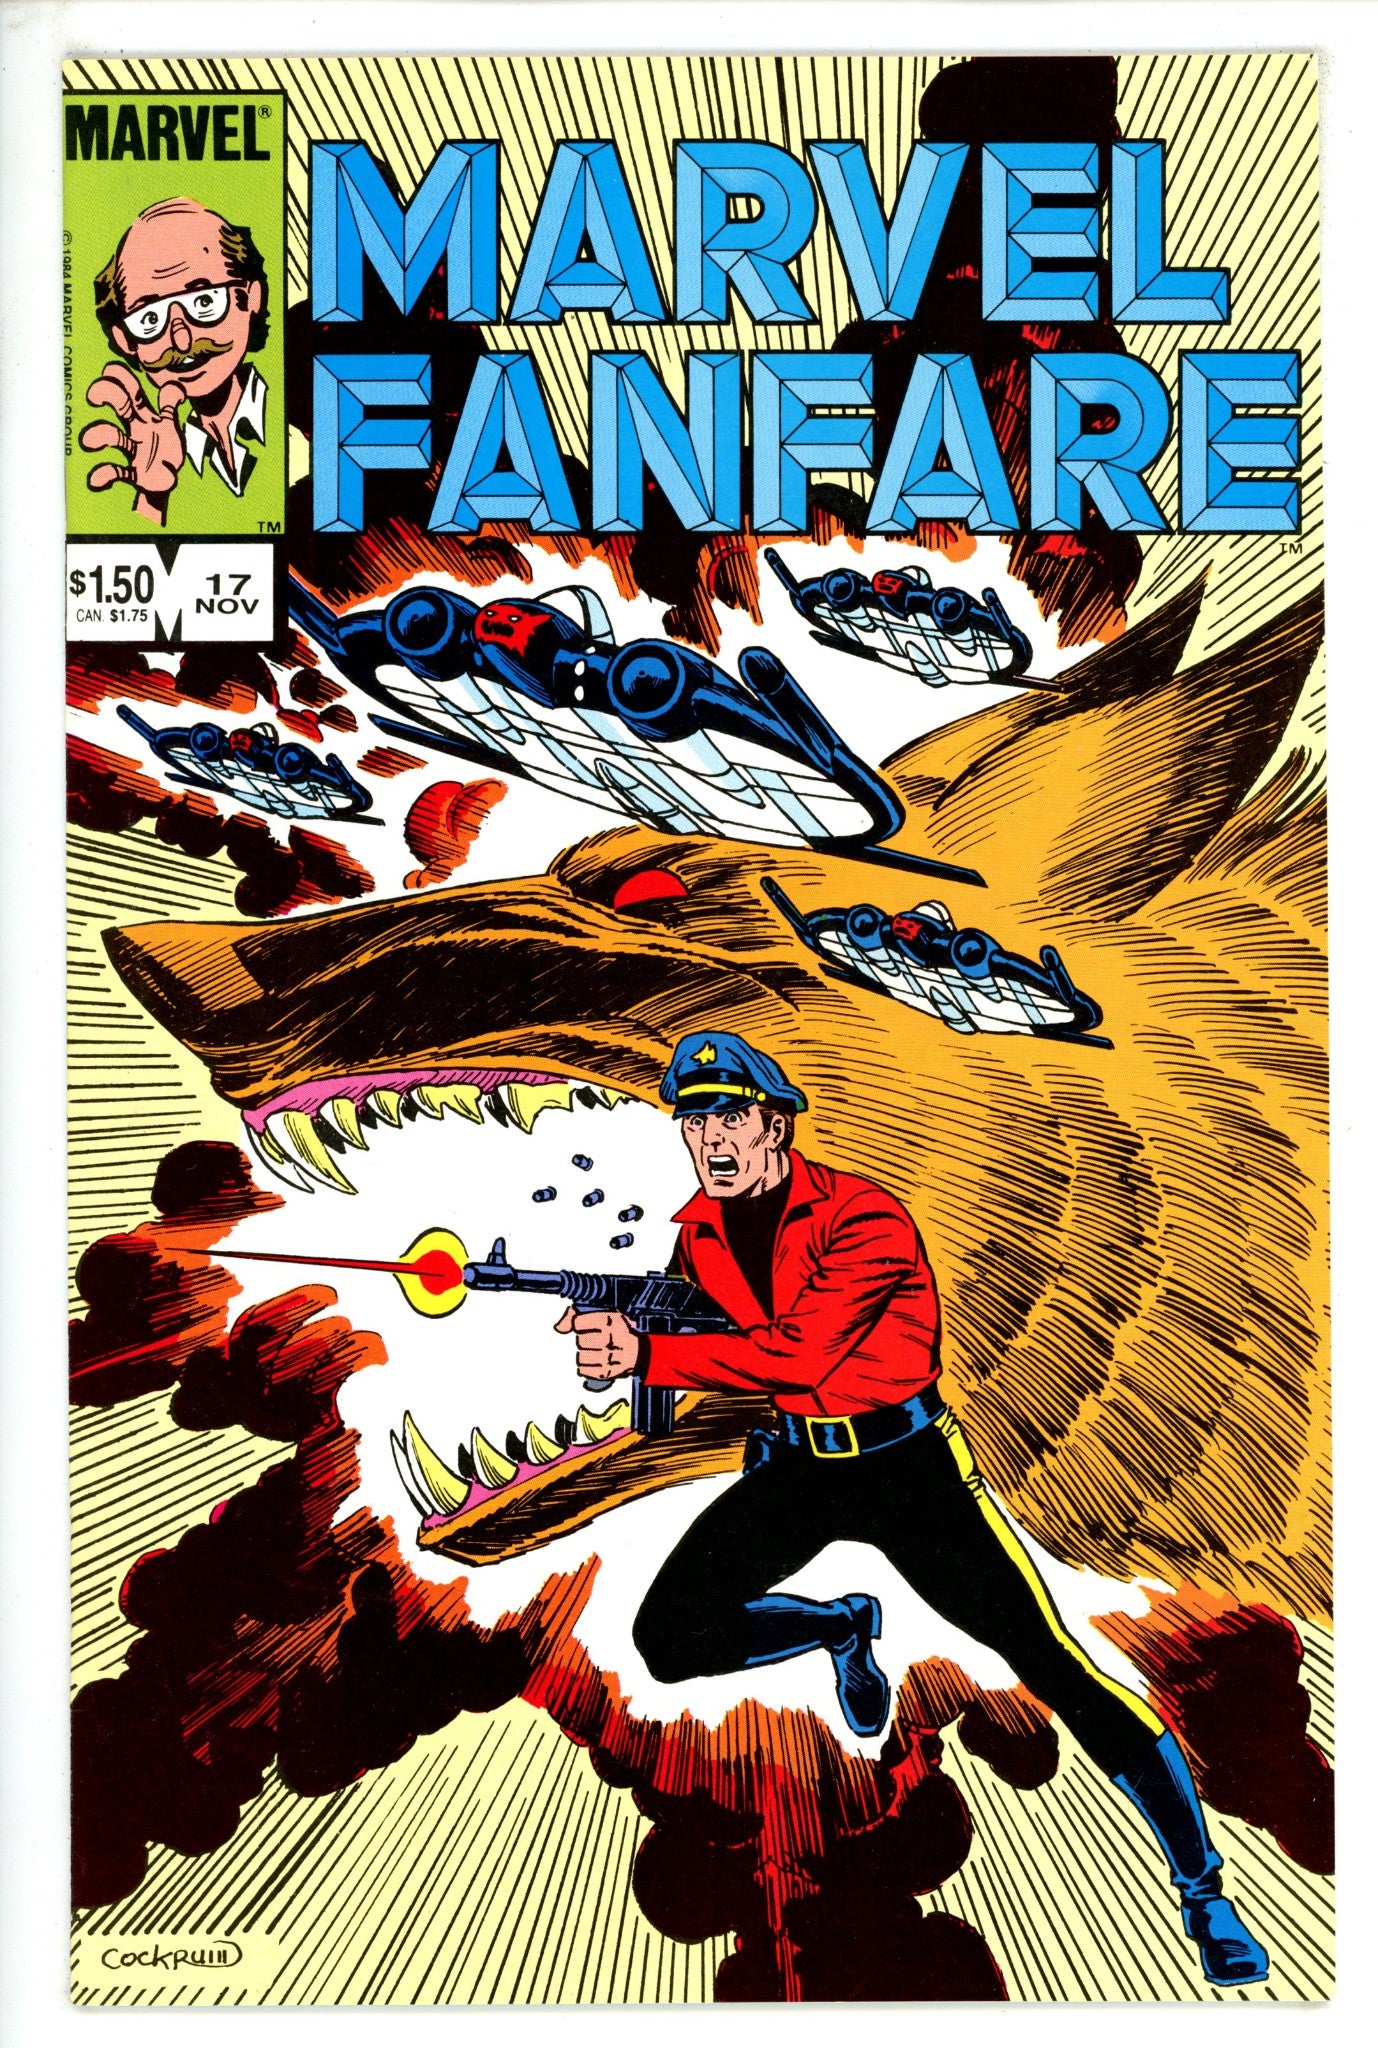 Marvel Fanfare Vol 1 17 (1984)